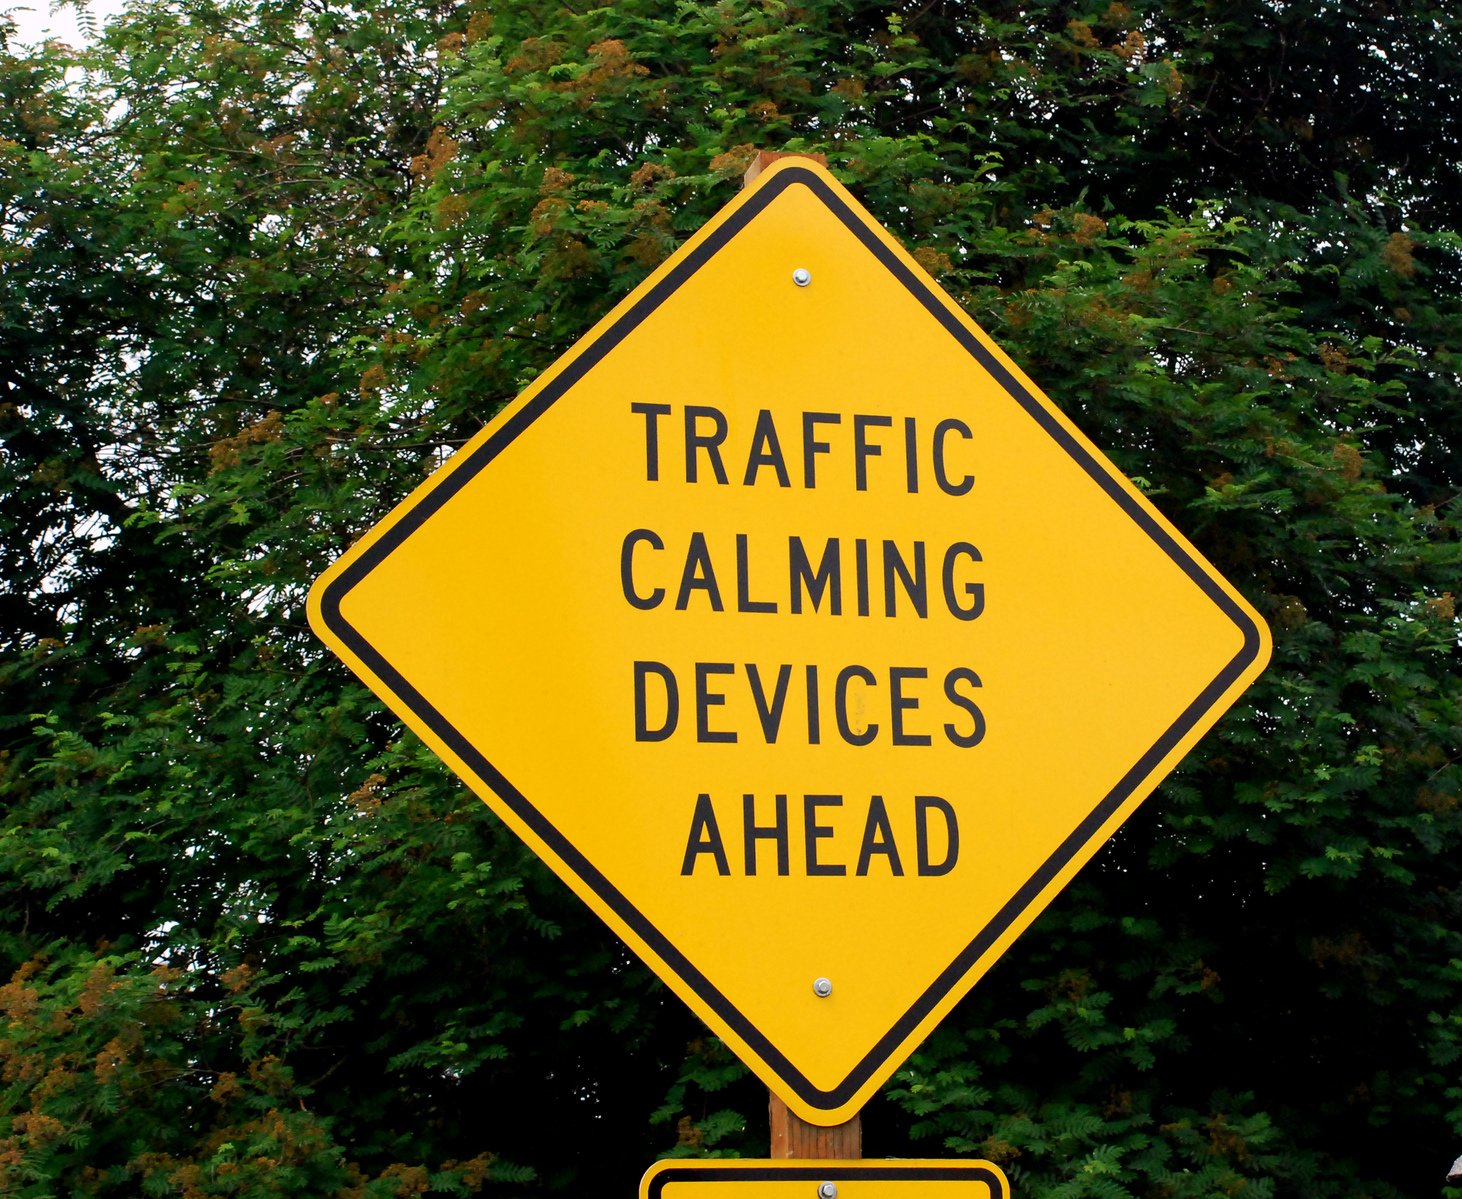 Traffic calming device